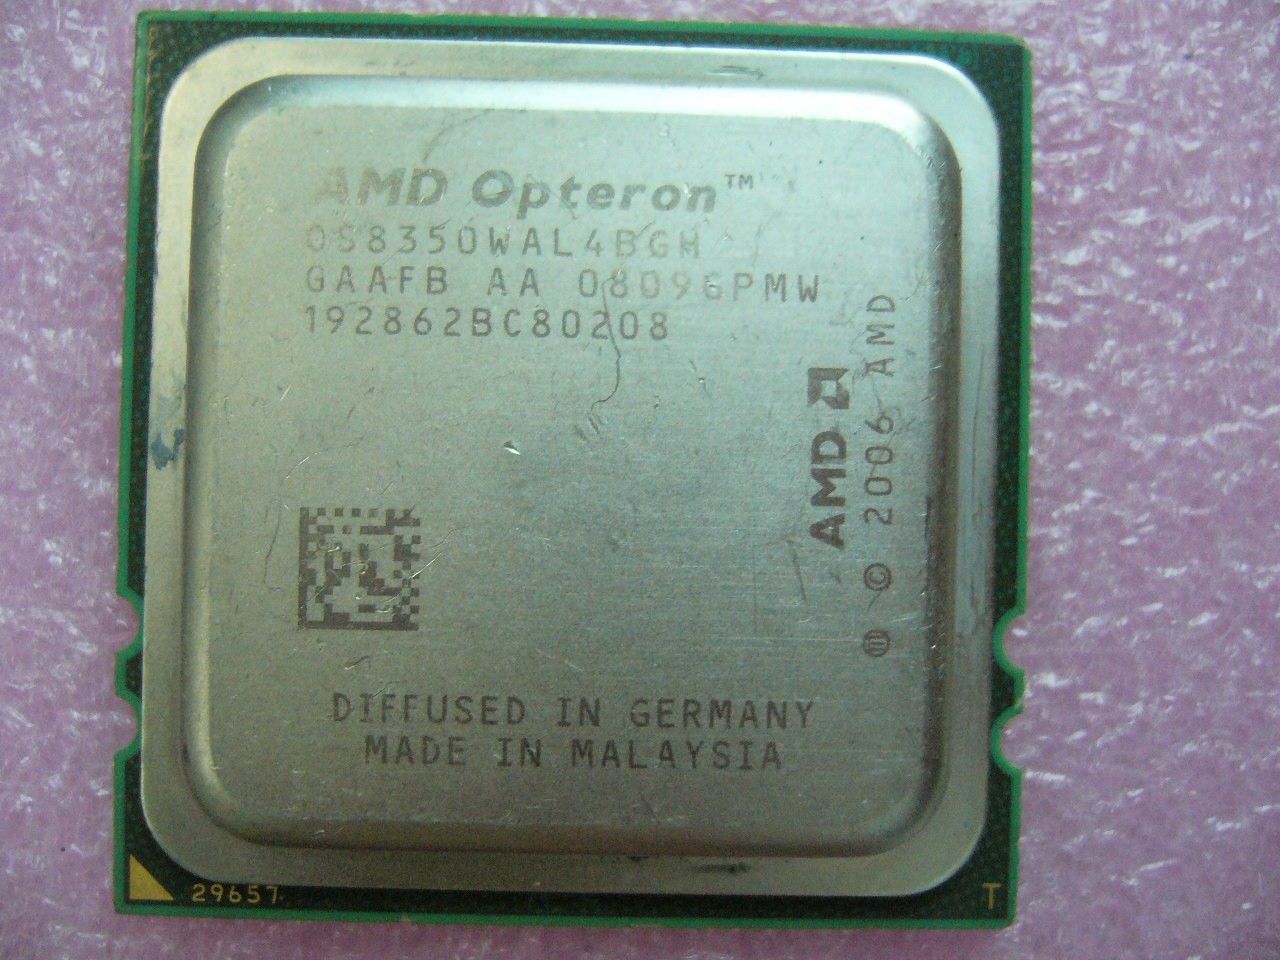 QTY 1x AMD Opteron 8350 2 GHz Quad-Core (OS8350WAL4BGH) CPU Socket F 1207